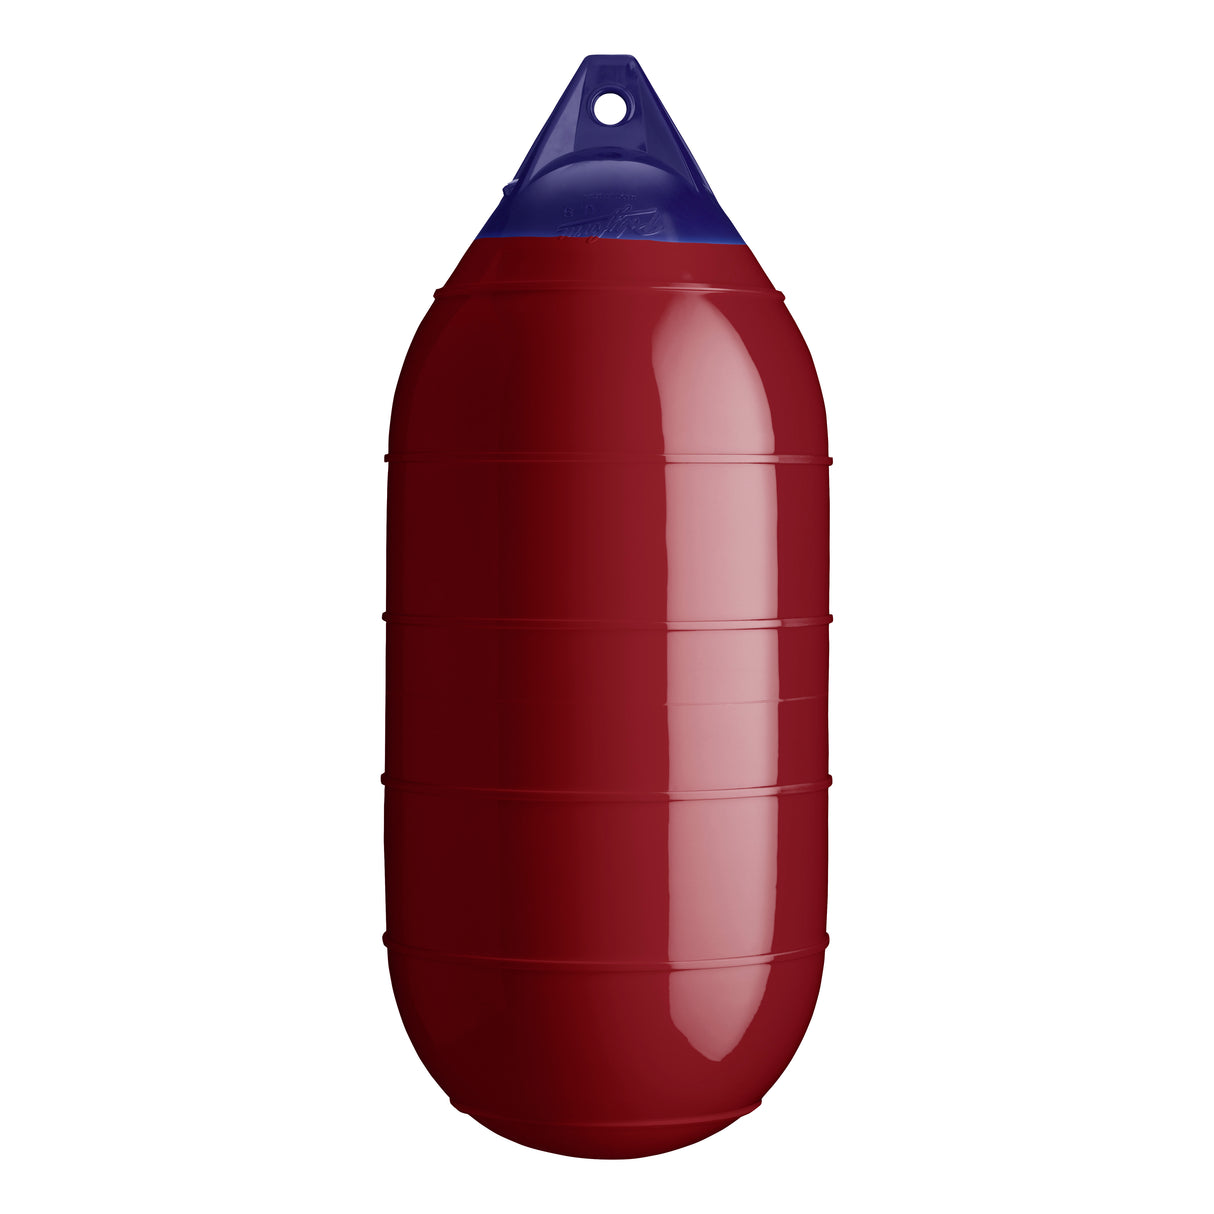 Burgundy inflatable low drag buoy, Polyform LD-4 